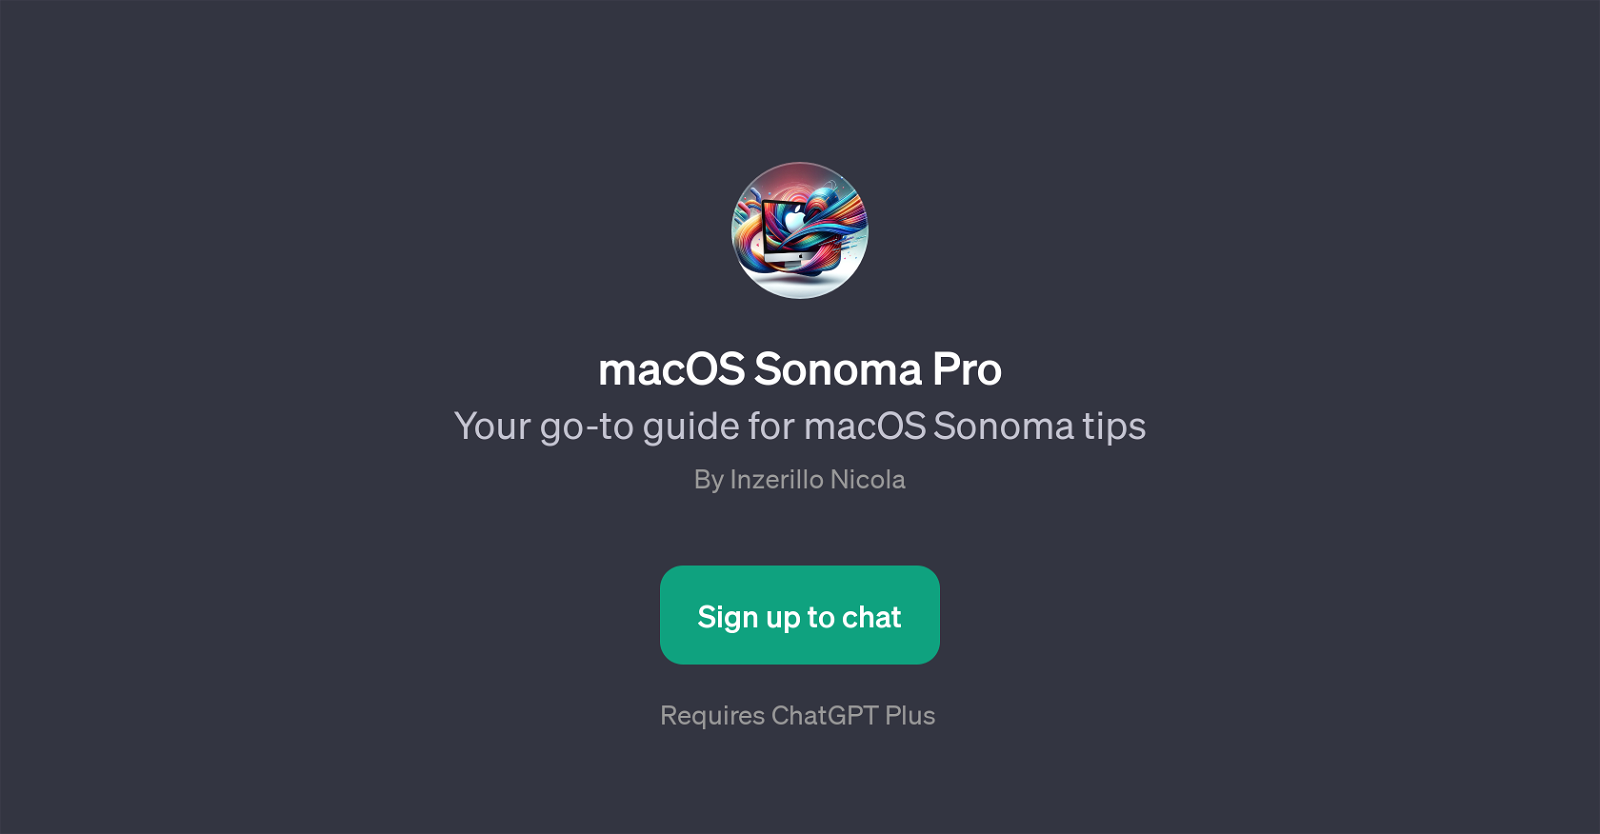 macOS Sonoma Pro website